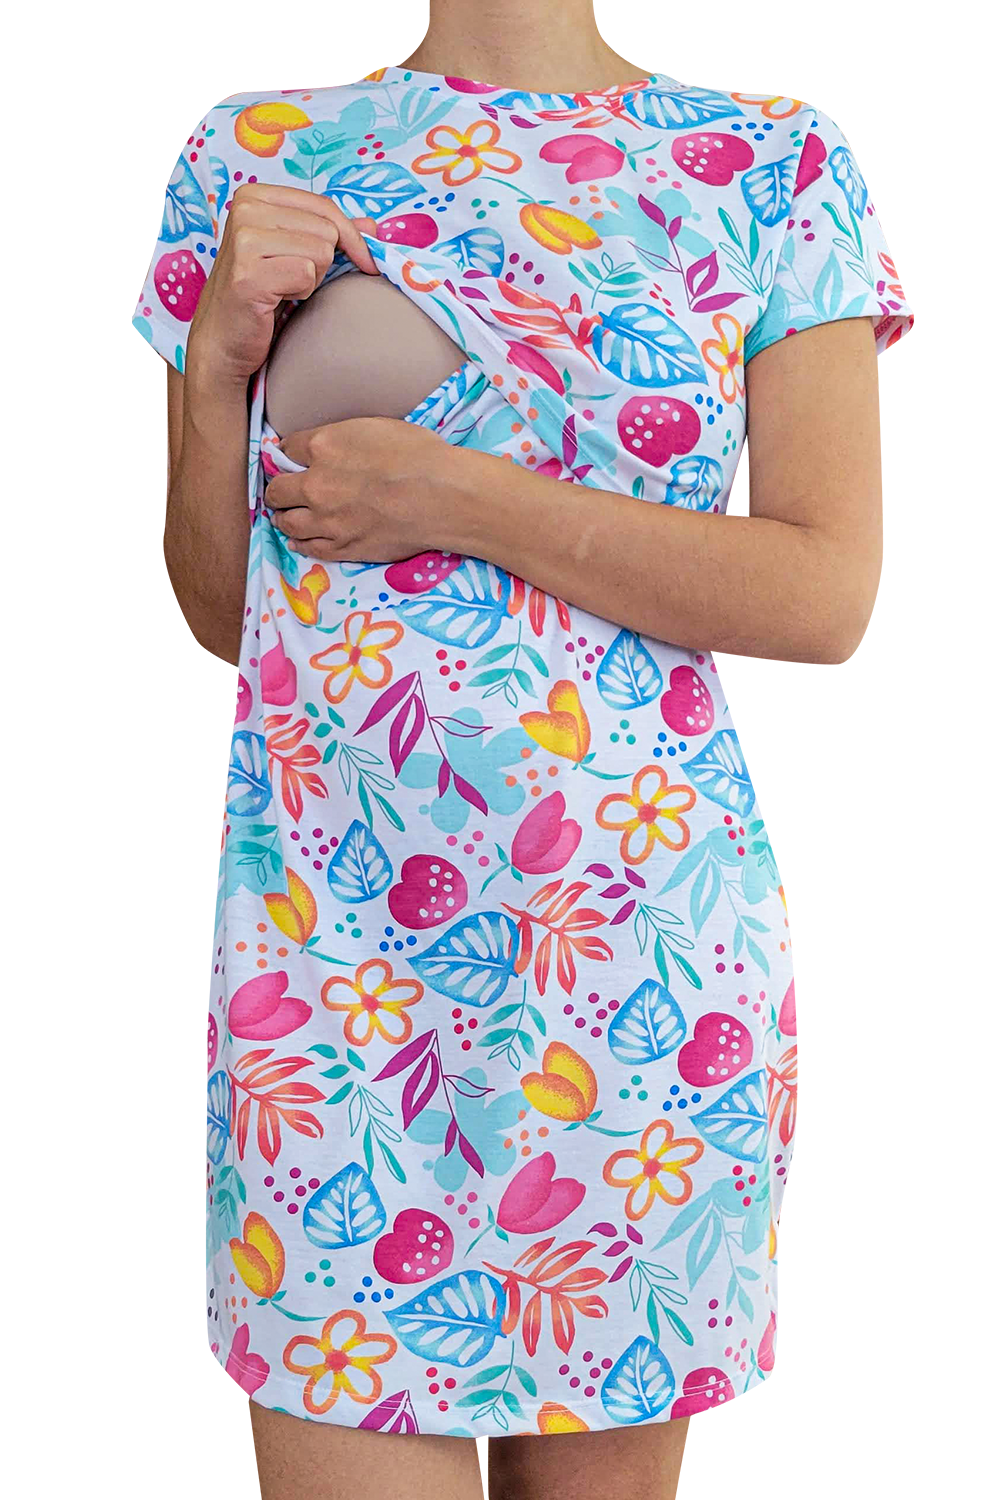 Camisón Pijama maternidad-lactancia. Flores de colores